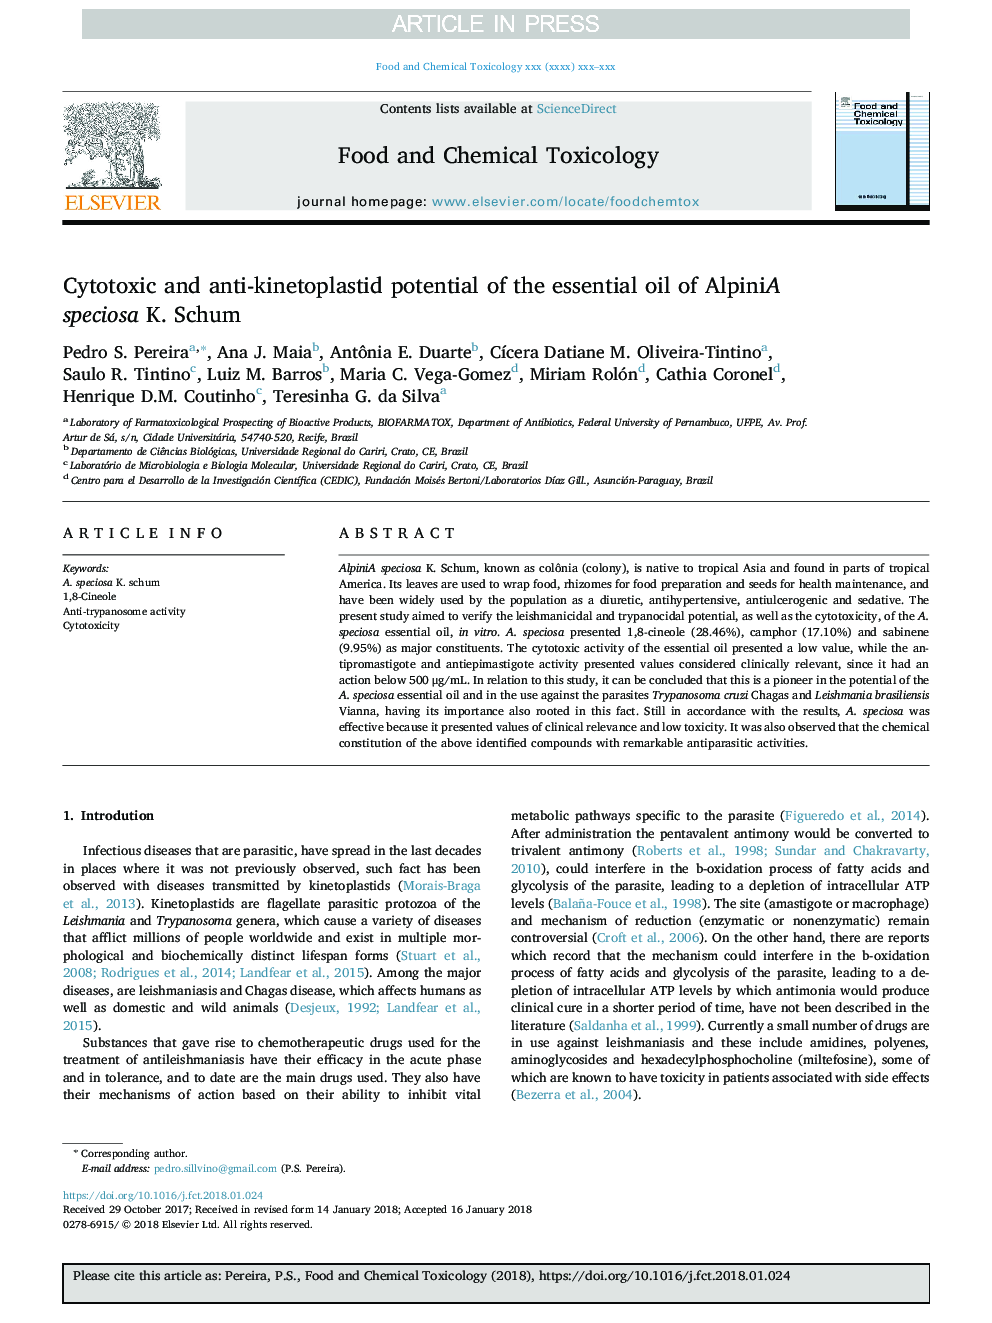 Cytotoxic and anti-kinetoplastid potential of the essential oil of Alpinia speciosa K. Schum